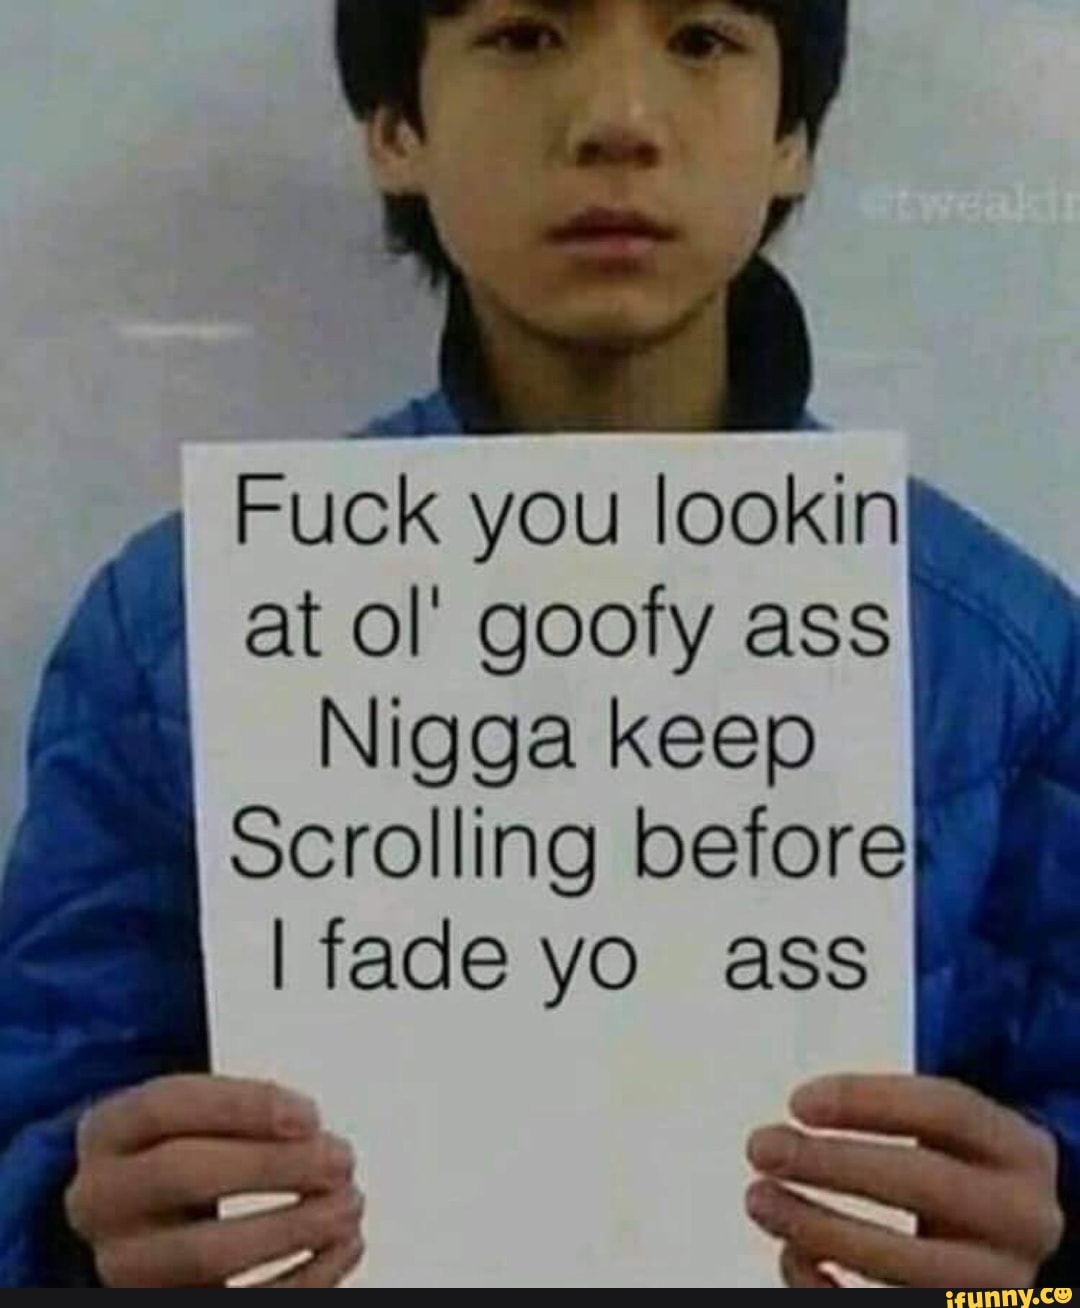 Goofy ass nigga